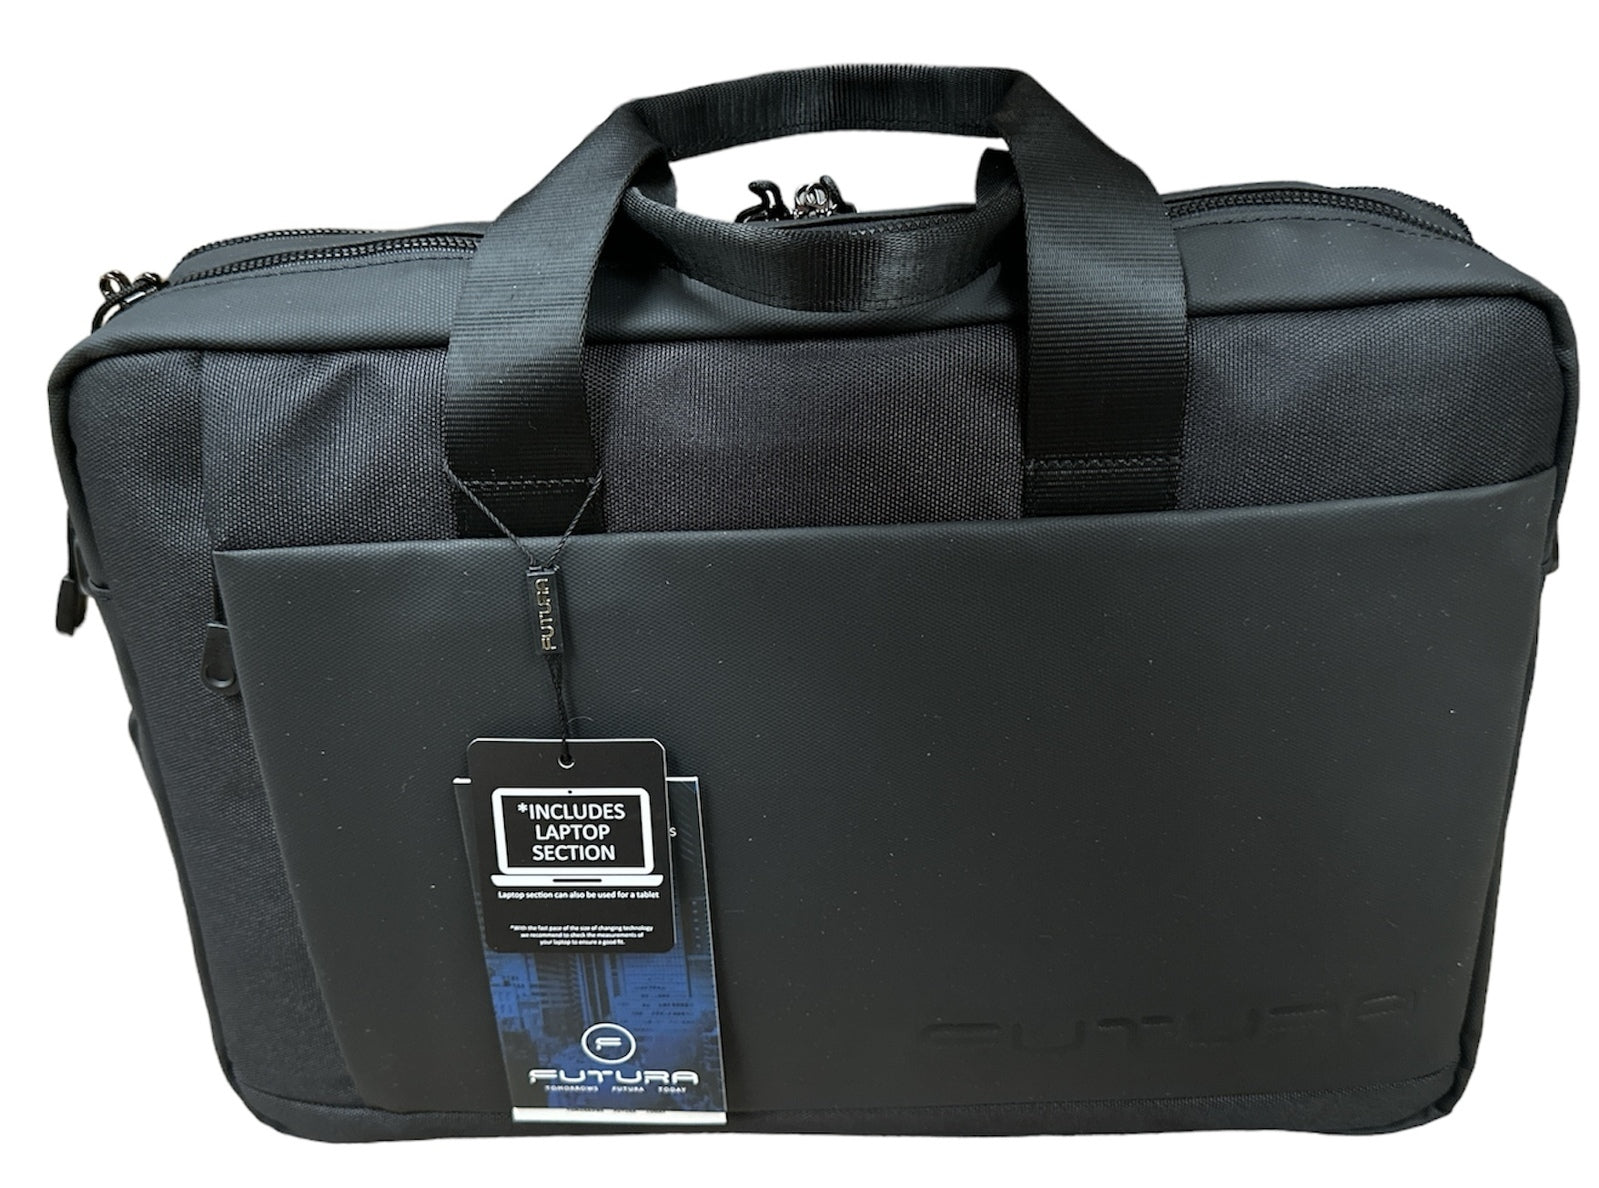 15" Futura Laptop Computer Bag Travel Work Messenger Bag w/USB Port - Black